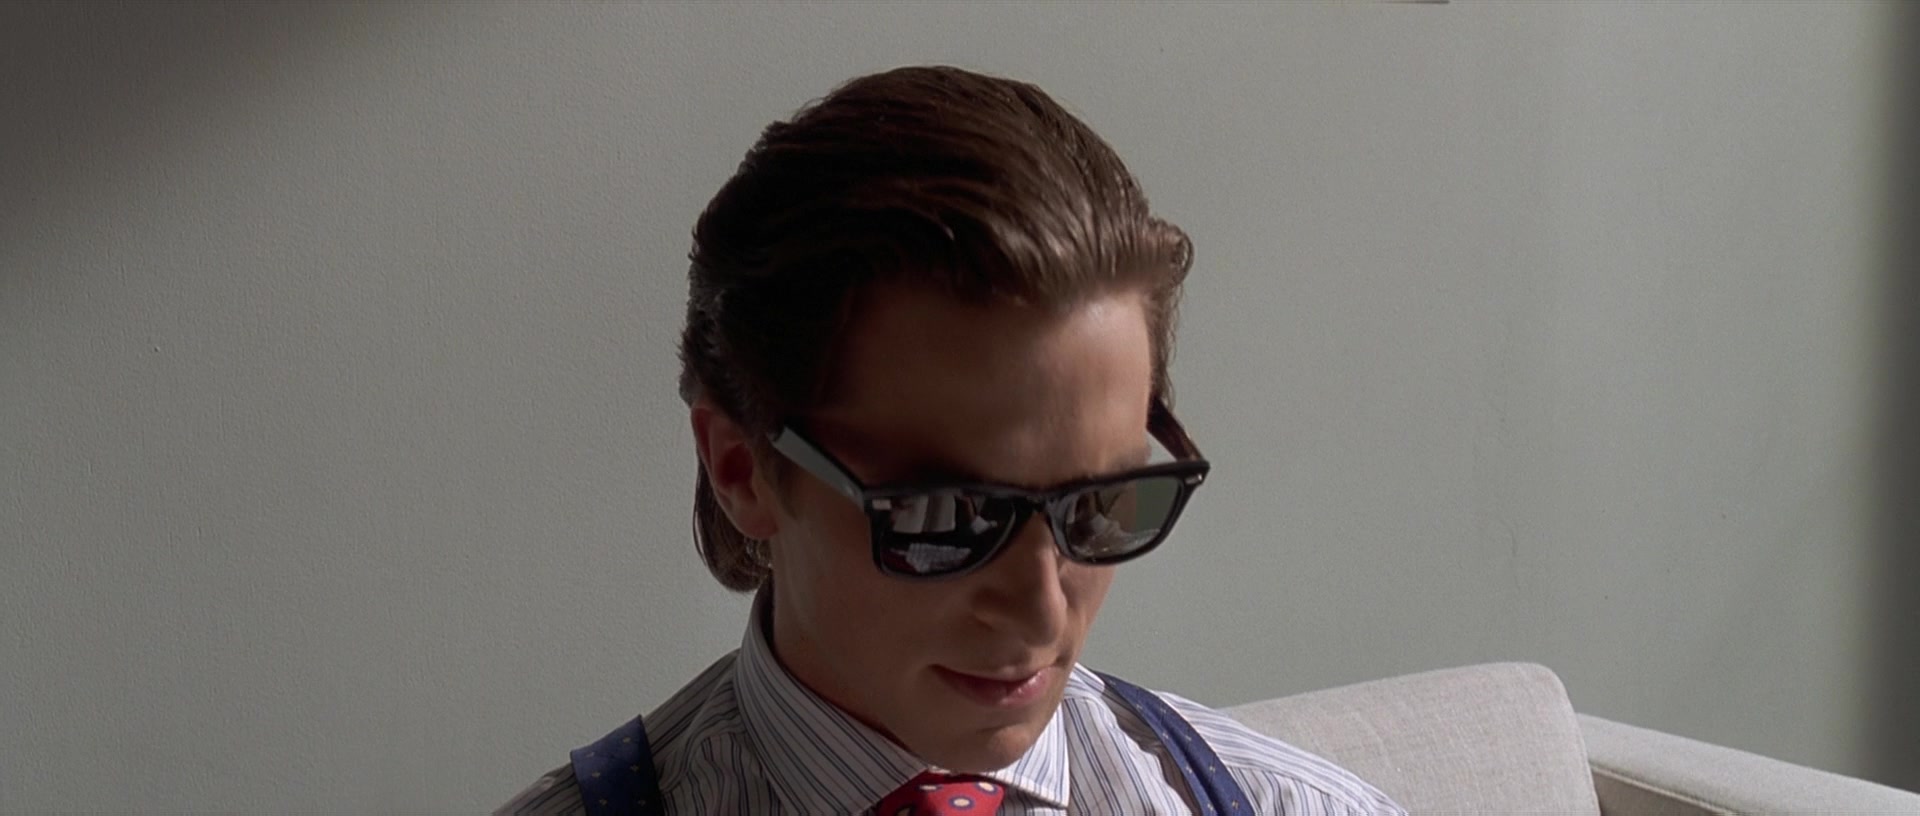 Ray-Ban Wayfarer Sunglasses Worn by Christian Bale as Patrick Bateman in Am...